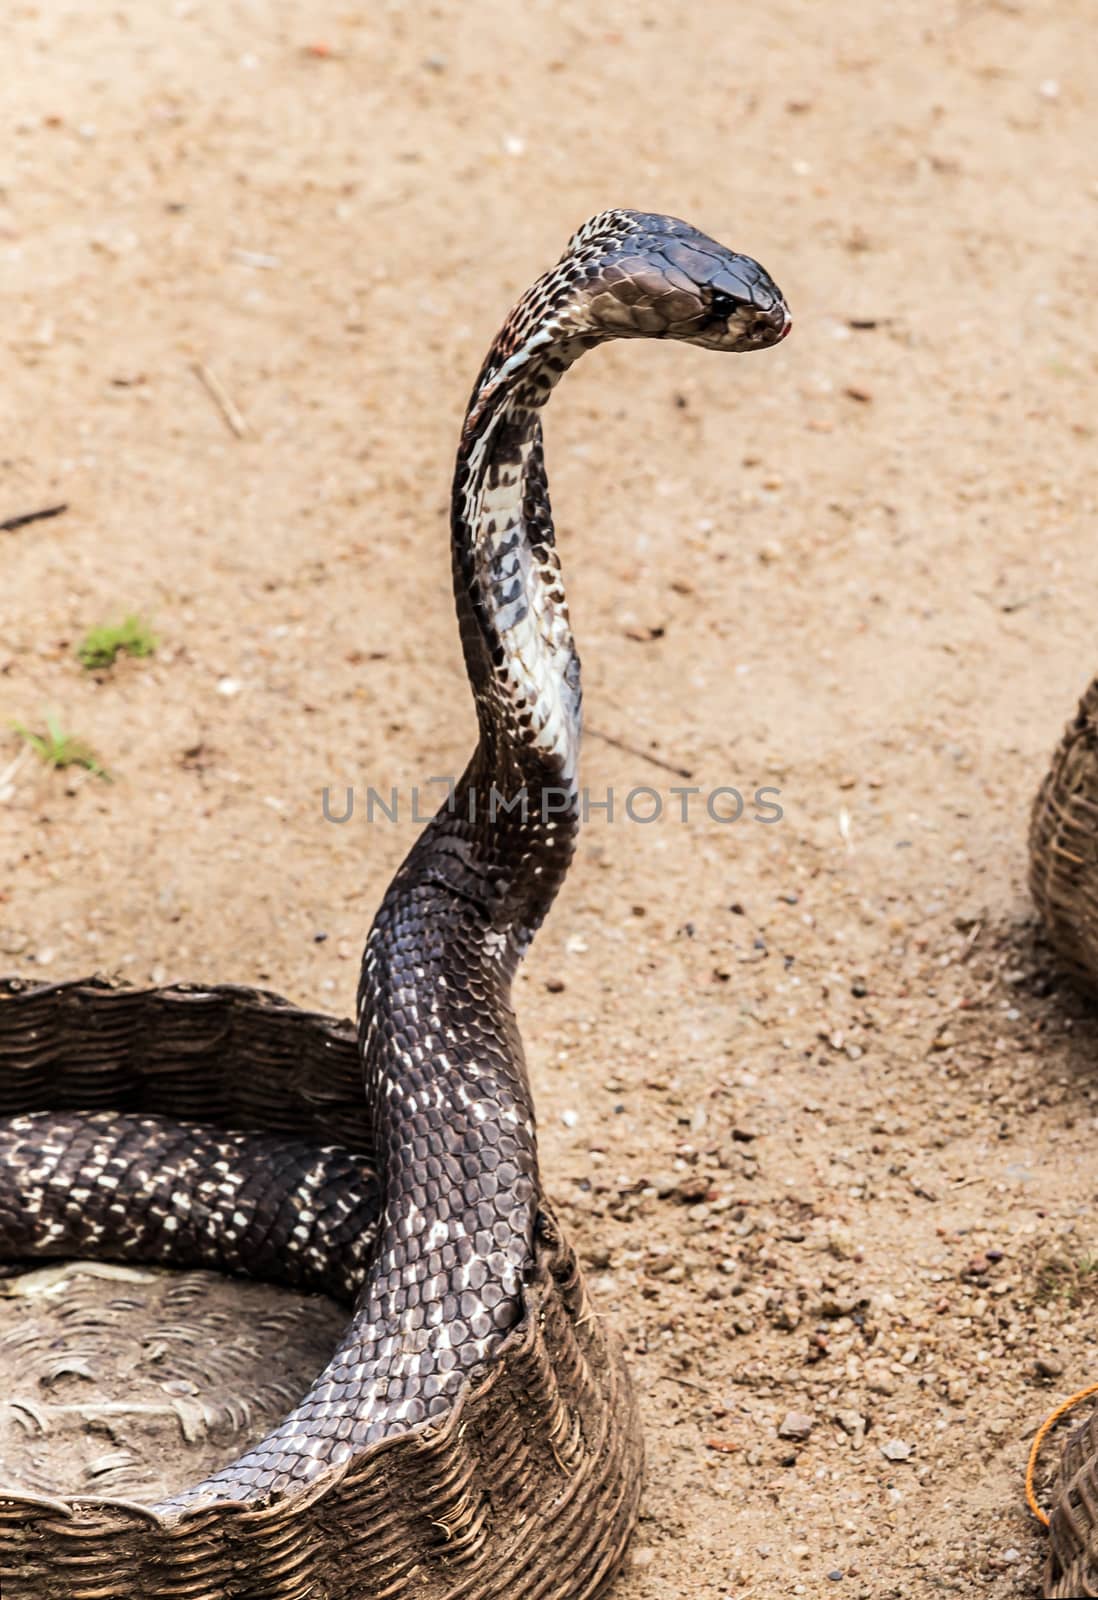 King Cobra Snake, Viper snake by Vladyslav